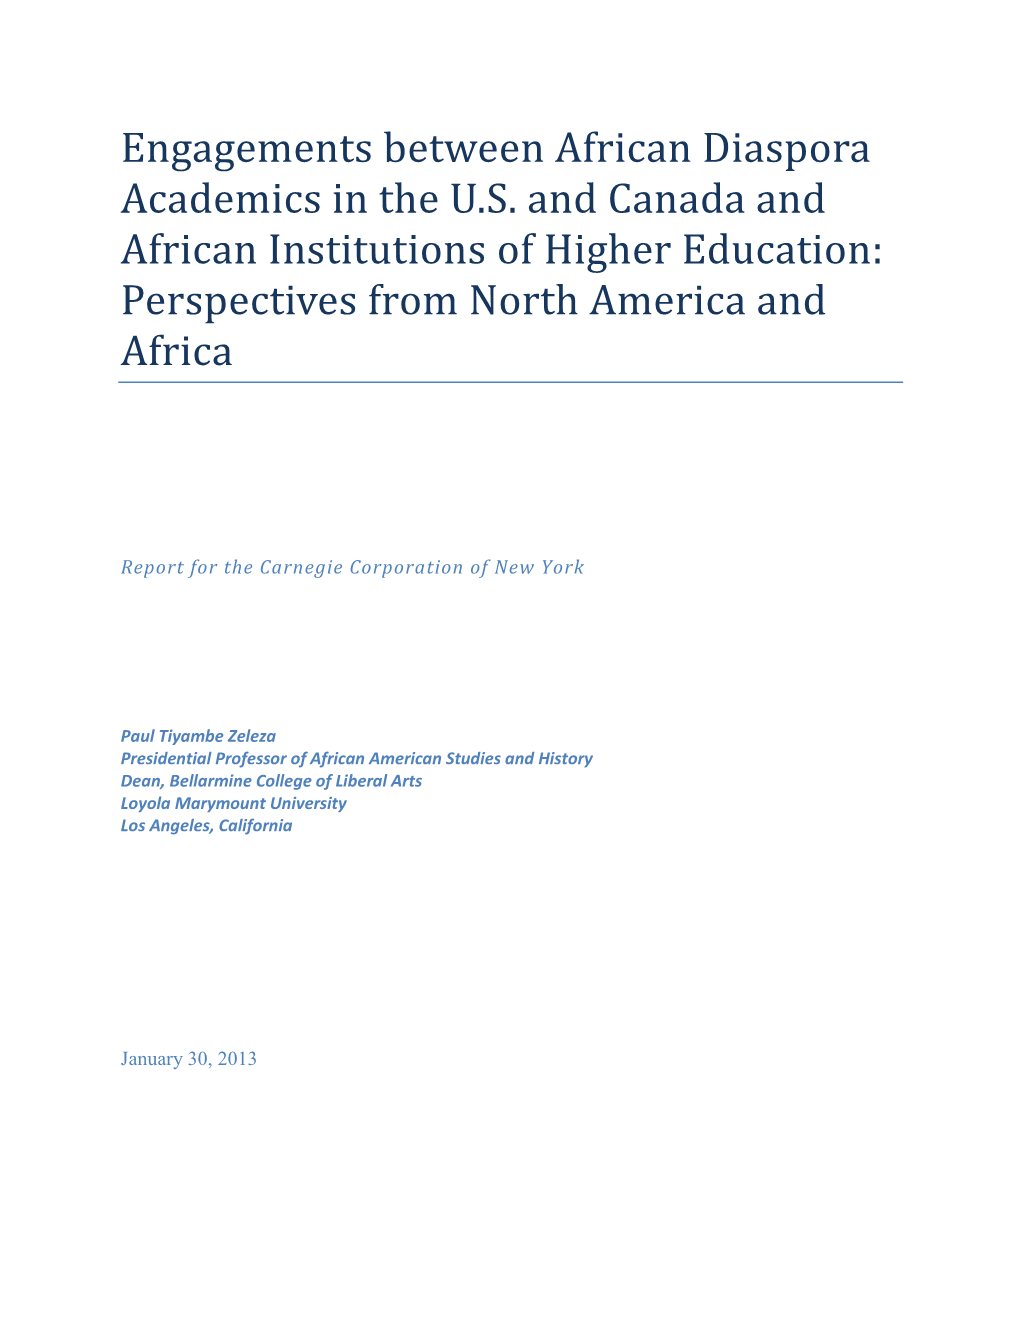 Engagements Between African Diaspora Academics in the US And